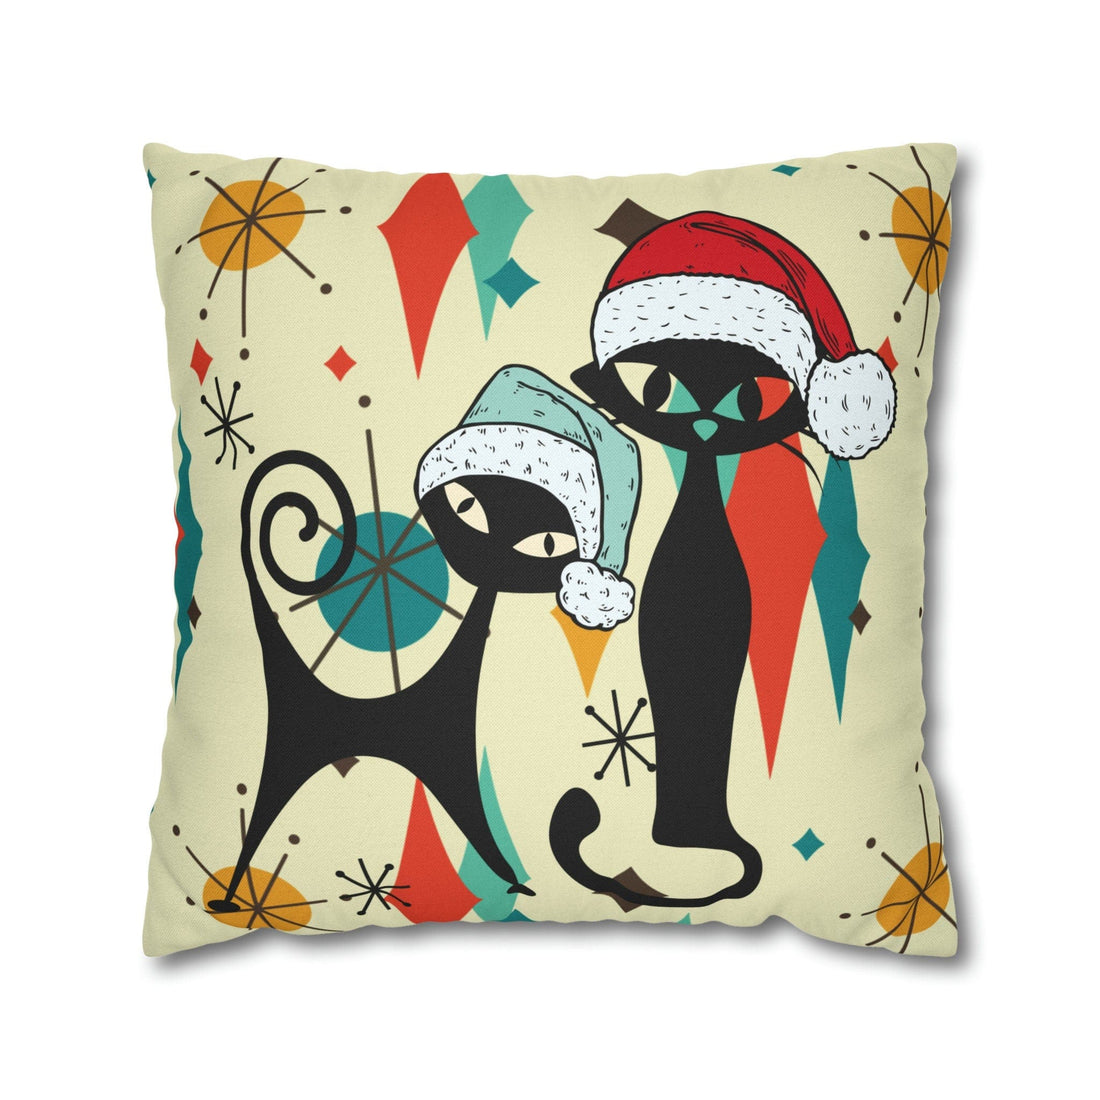 Kate McEnroe New York Atomic Cat Franciscan Diamond Starburst Christmas Pillow Cover, Mid Century Modern Retro Kitschy Holiday DecorThrow Pillow Covers15849119909810970496